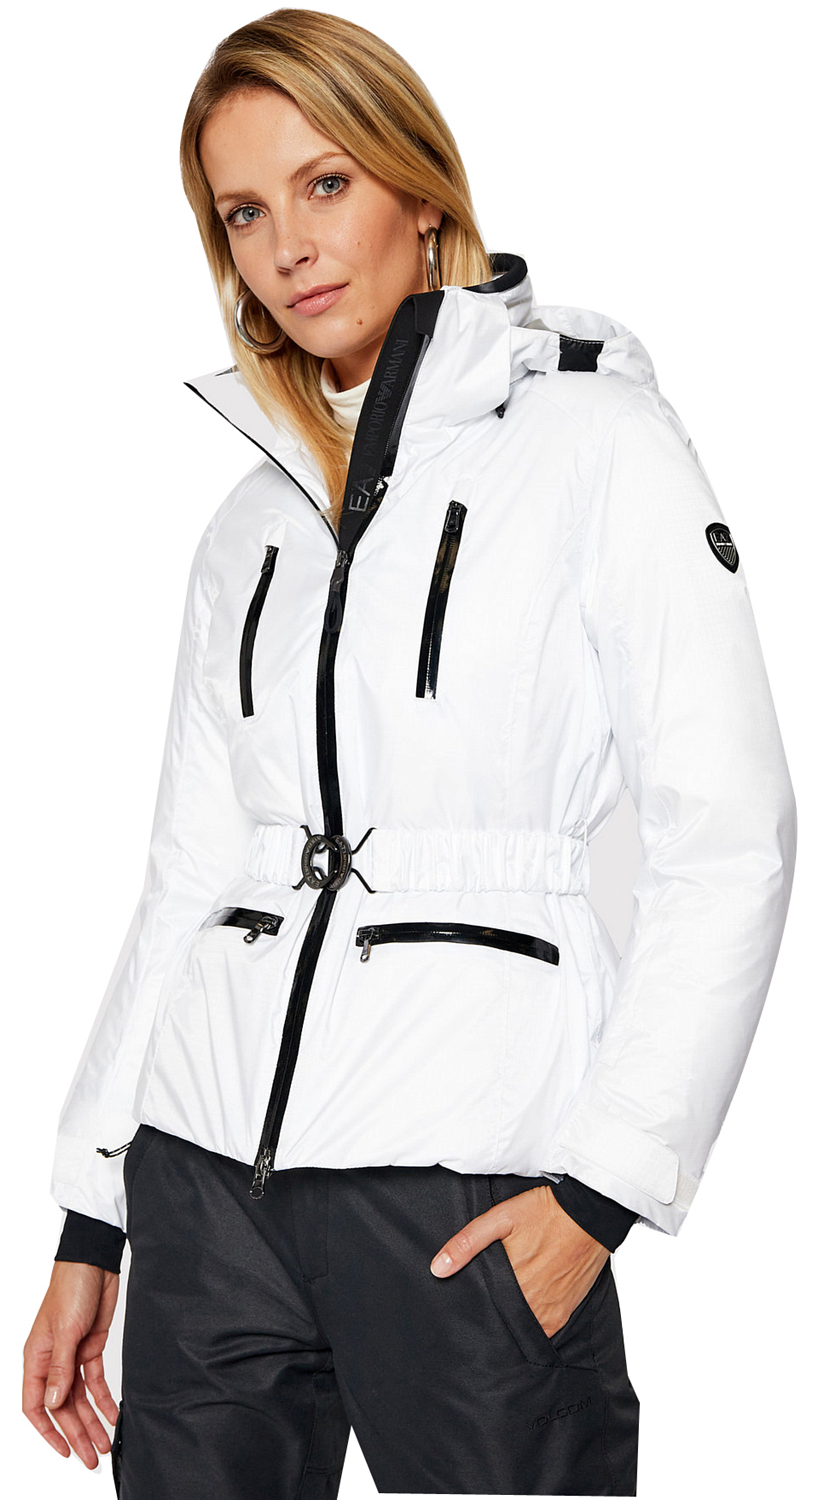 Куртка горнолыжная EA7 Emporio Armani 2020-21 SKI W JKT 7 White